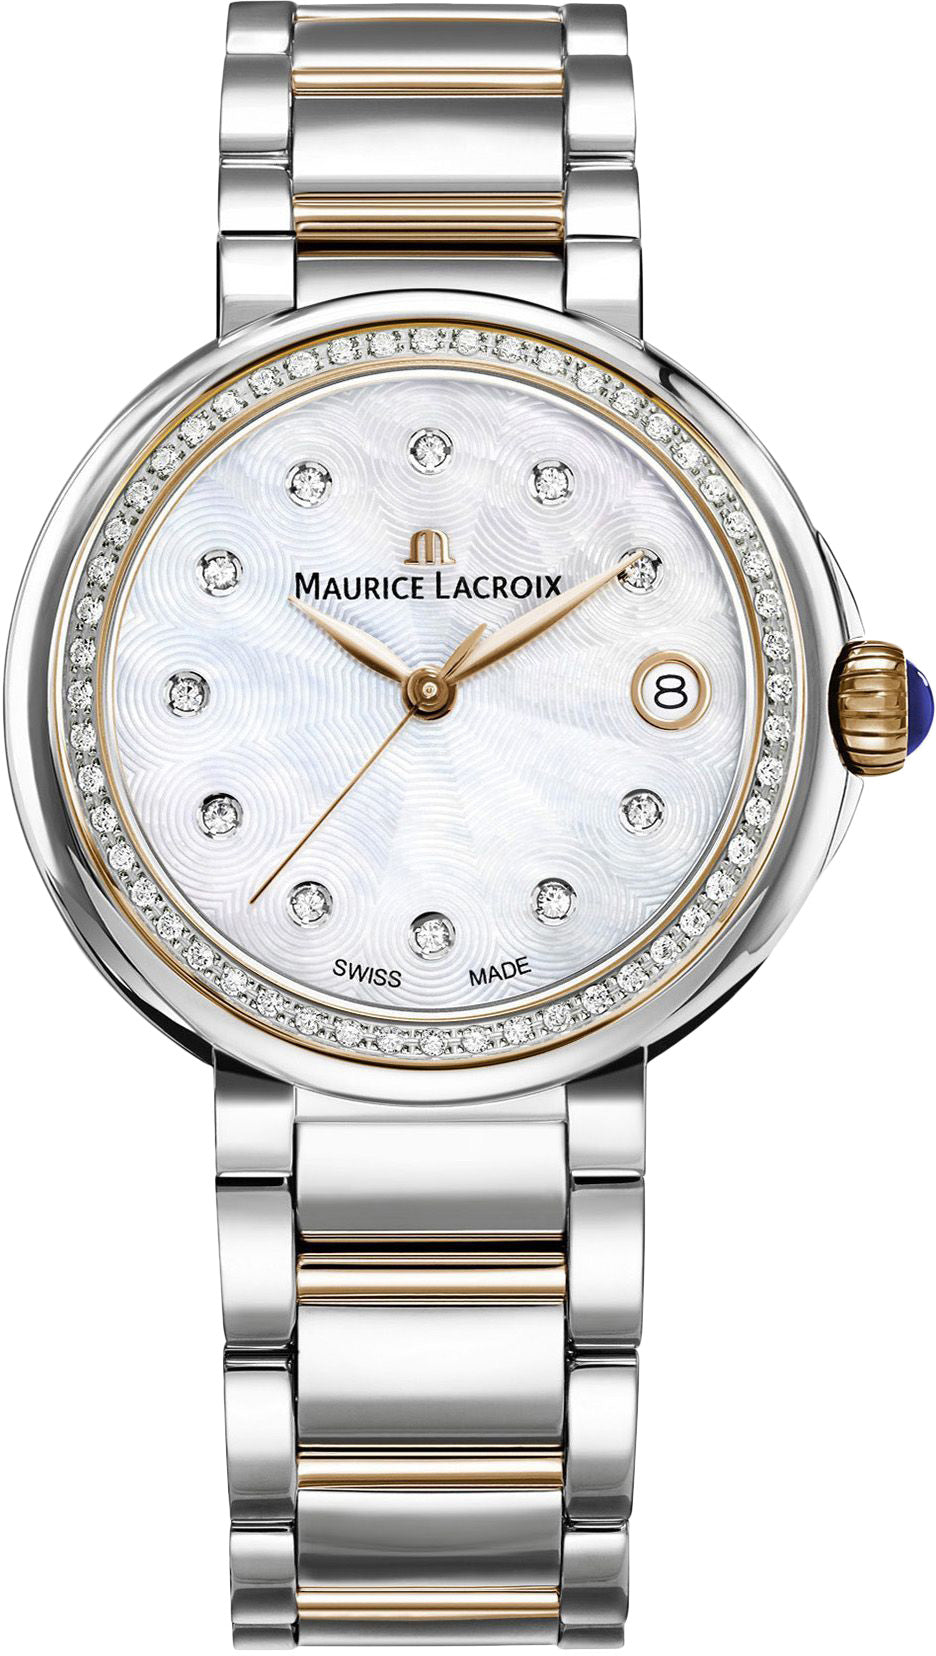 Maurice Lacroix Watch Fiaba Date FA1007-PVP23-170-1 Watch | Jura Watches